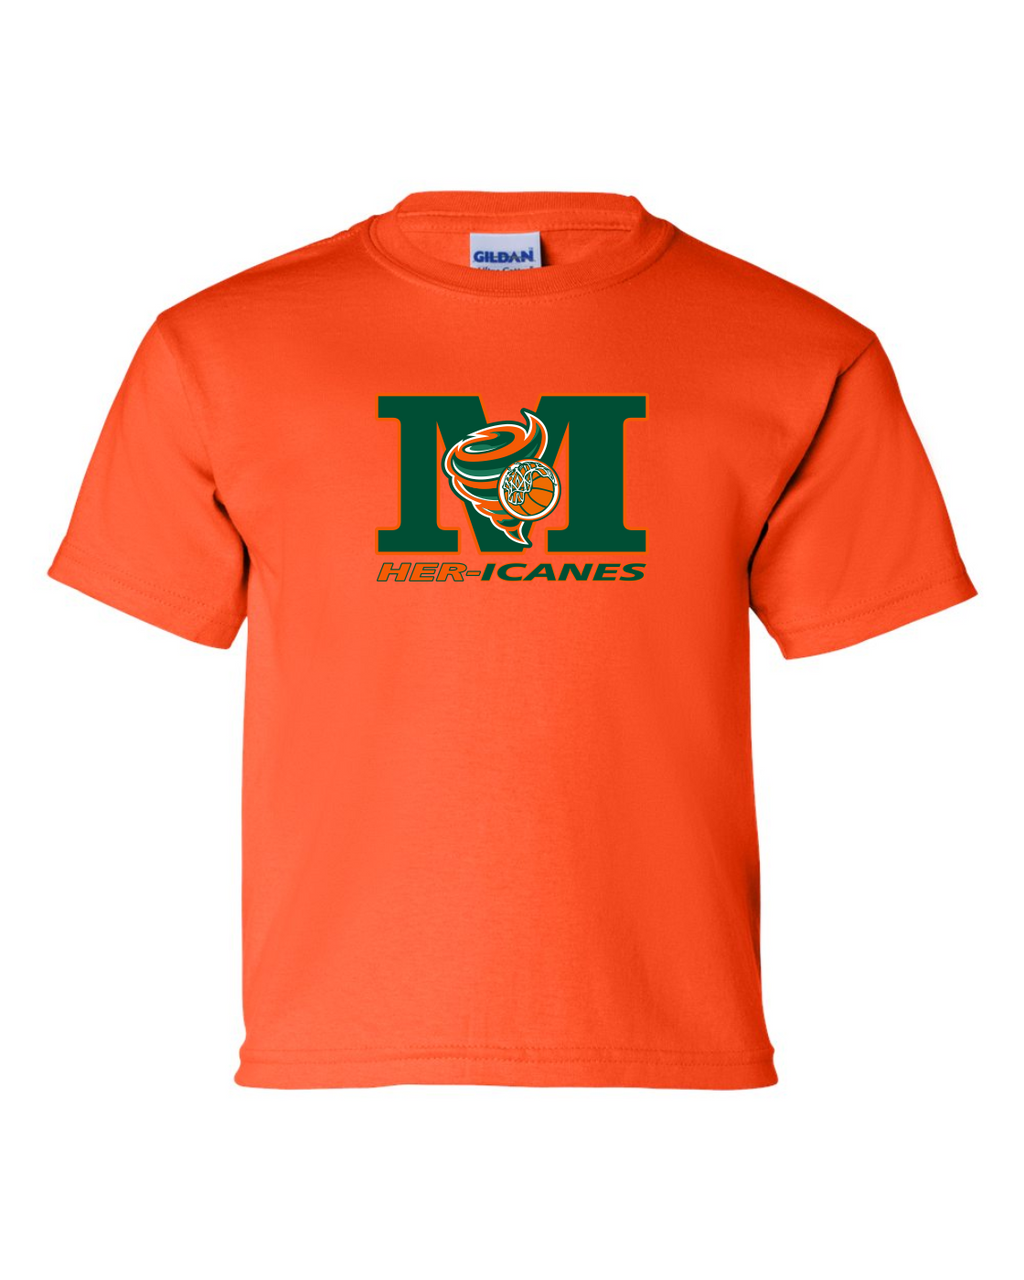 Miramichi Her-icanes - Orange Cotton T-shirt - Youth